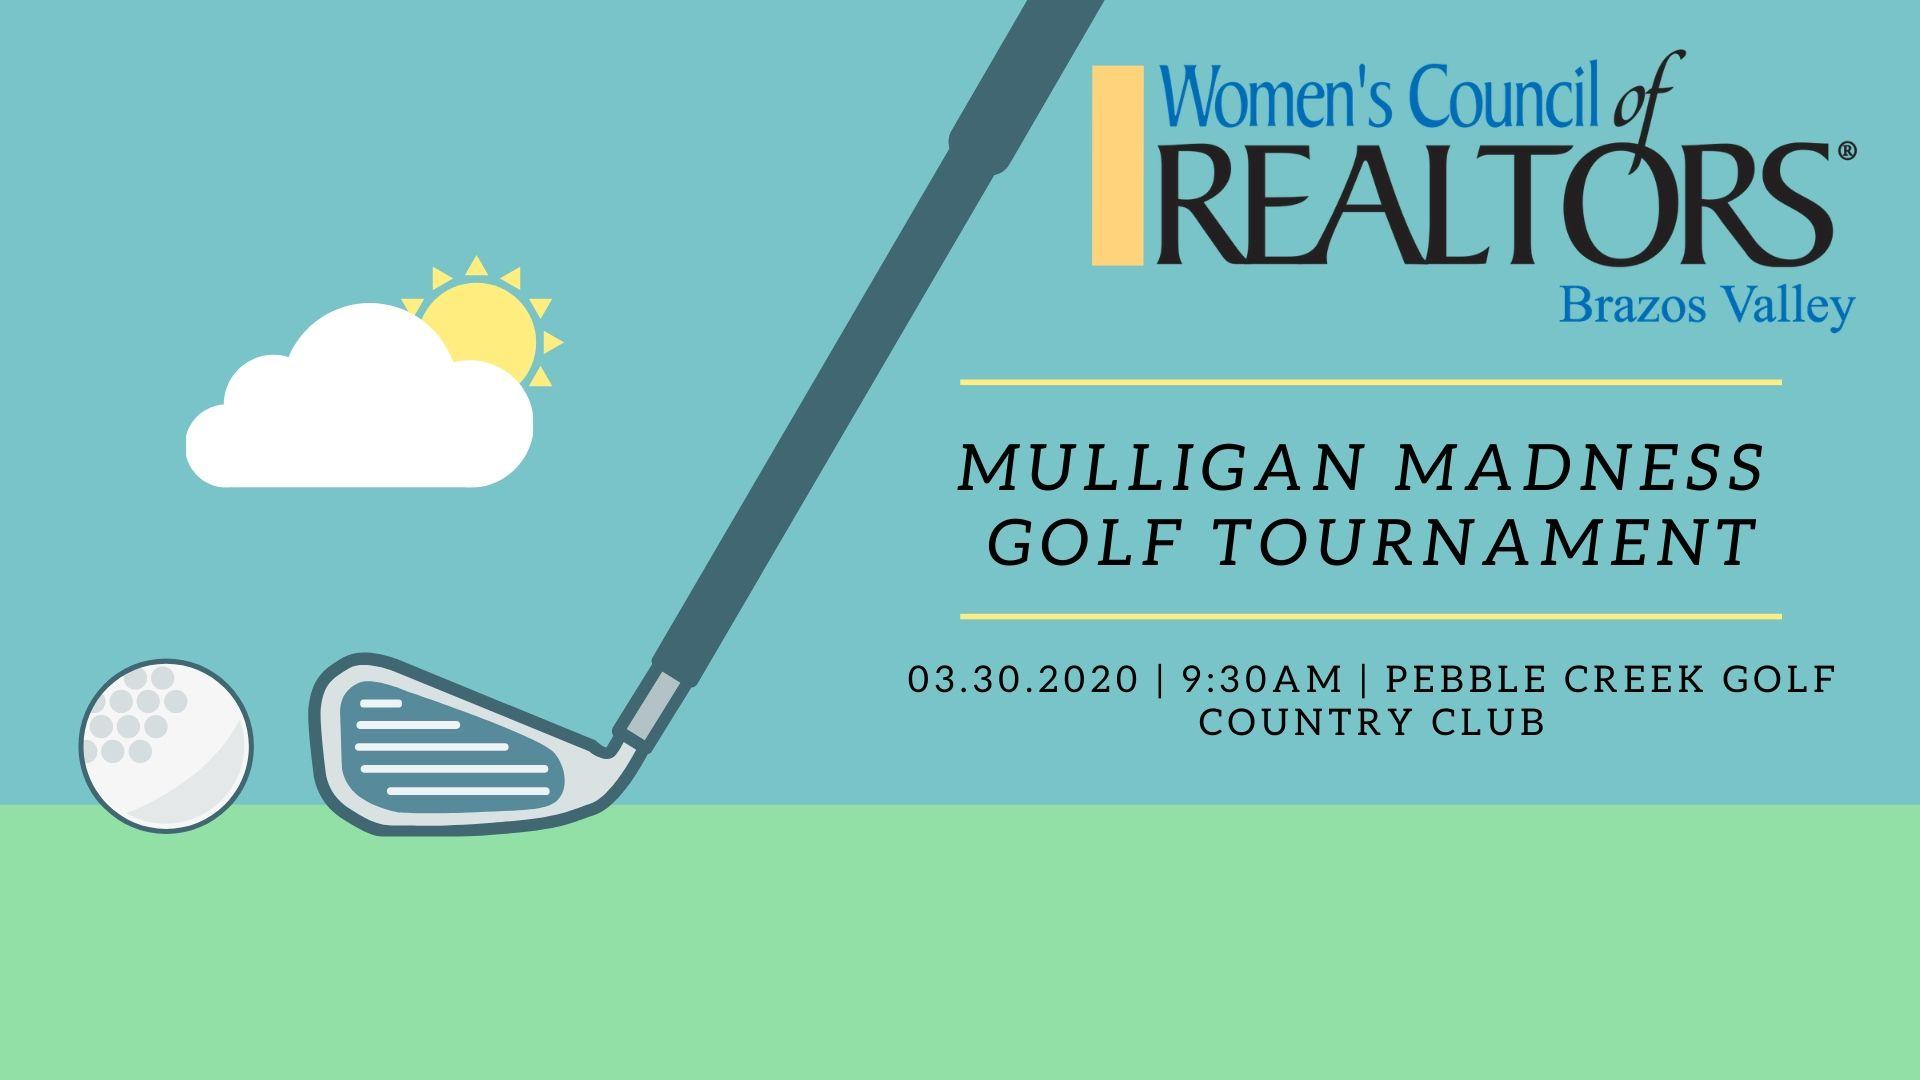 Mulligan Madness Golf Tournament